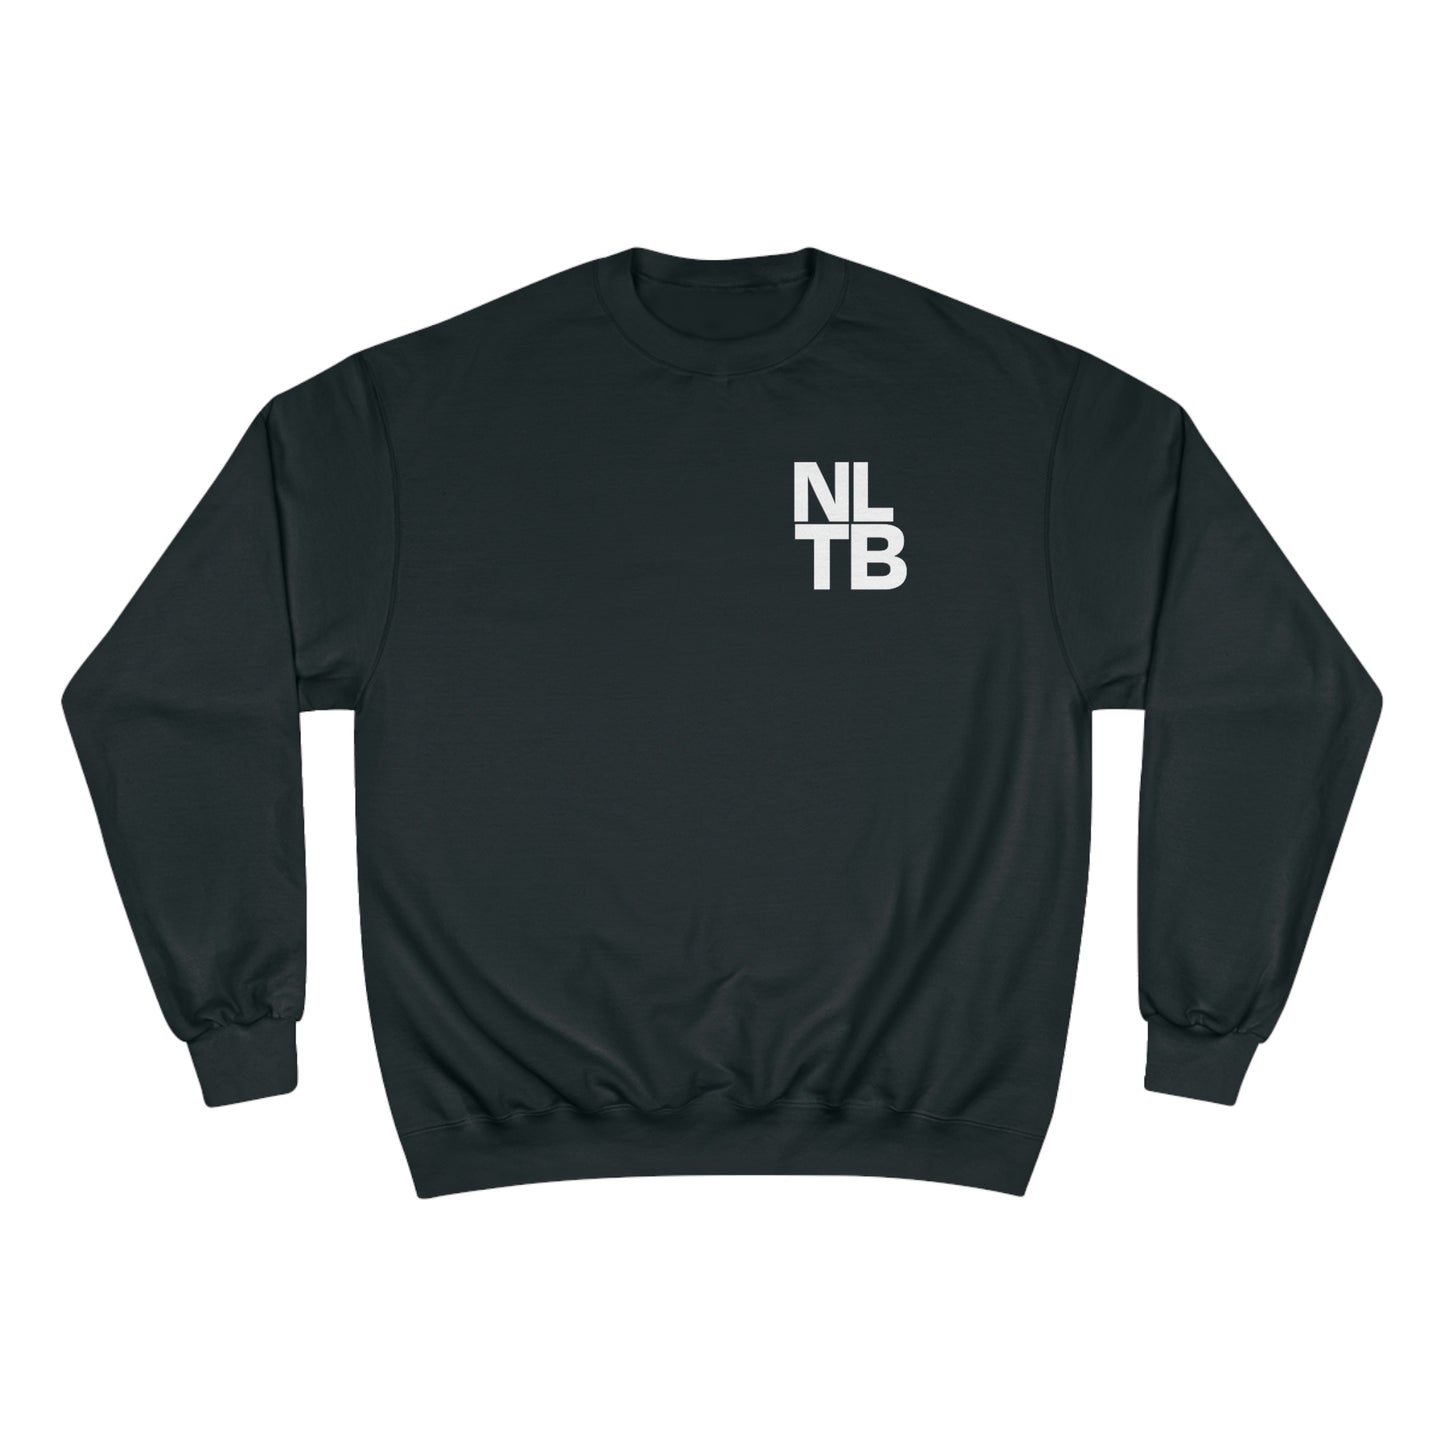 "Nothing Like The Bridge NLTB" Champion Sweatshirt